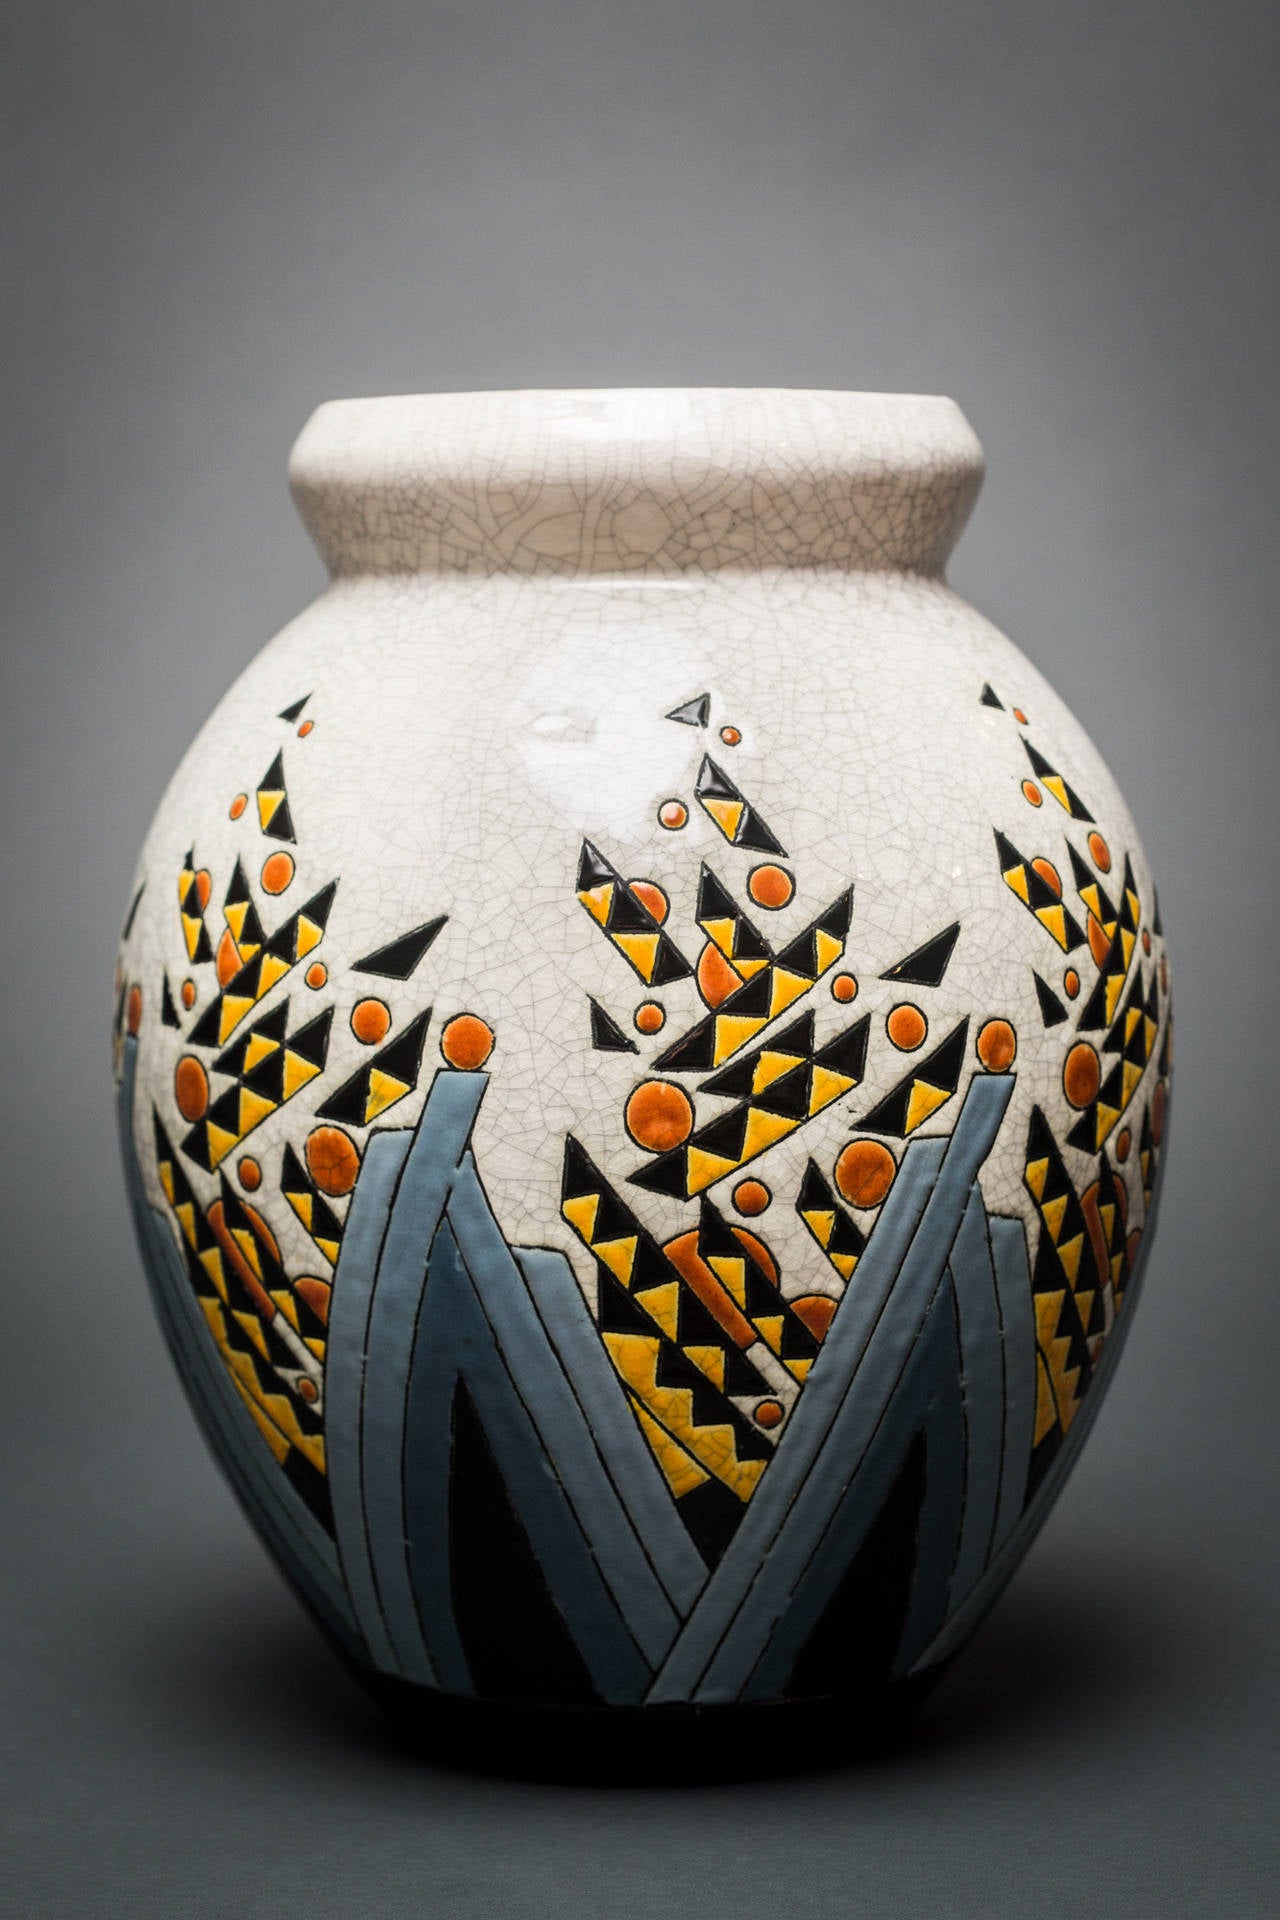 Keramis abstract ceramic vase, designed by Charles Catteau
Wonderful geometric Art Deco pattern
Numbered D.1210.